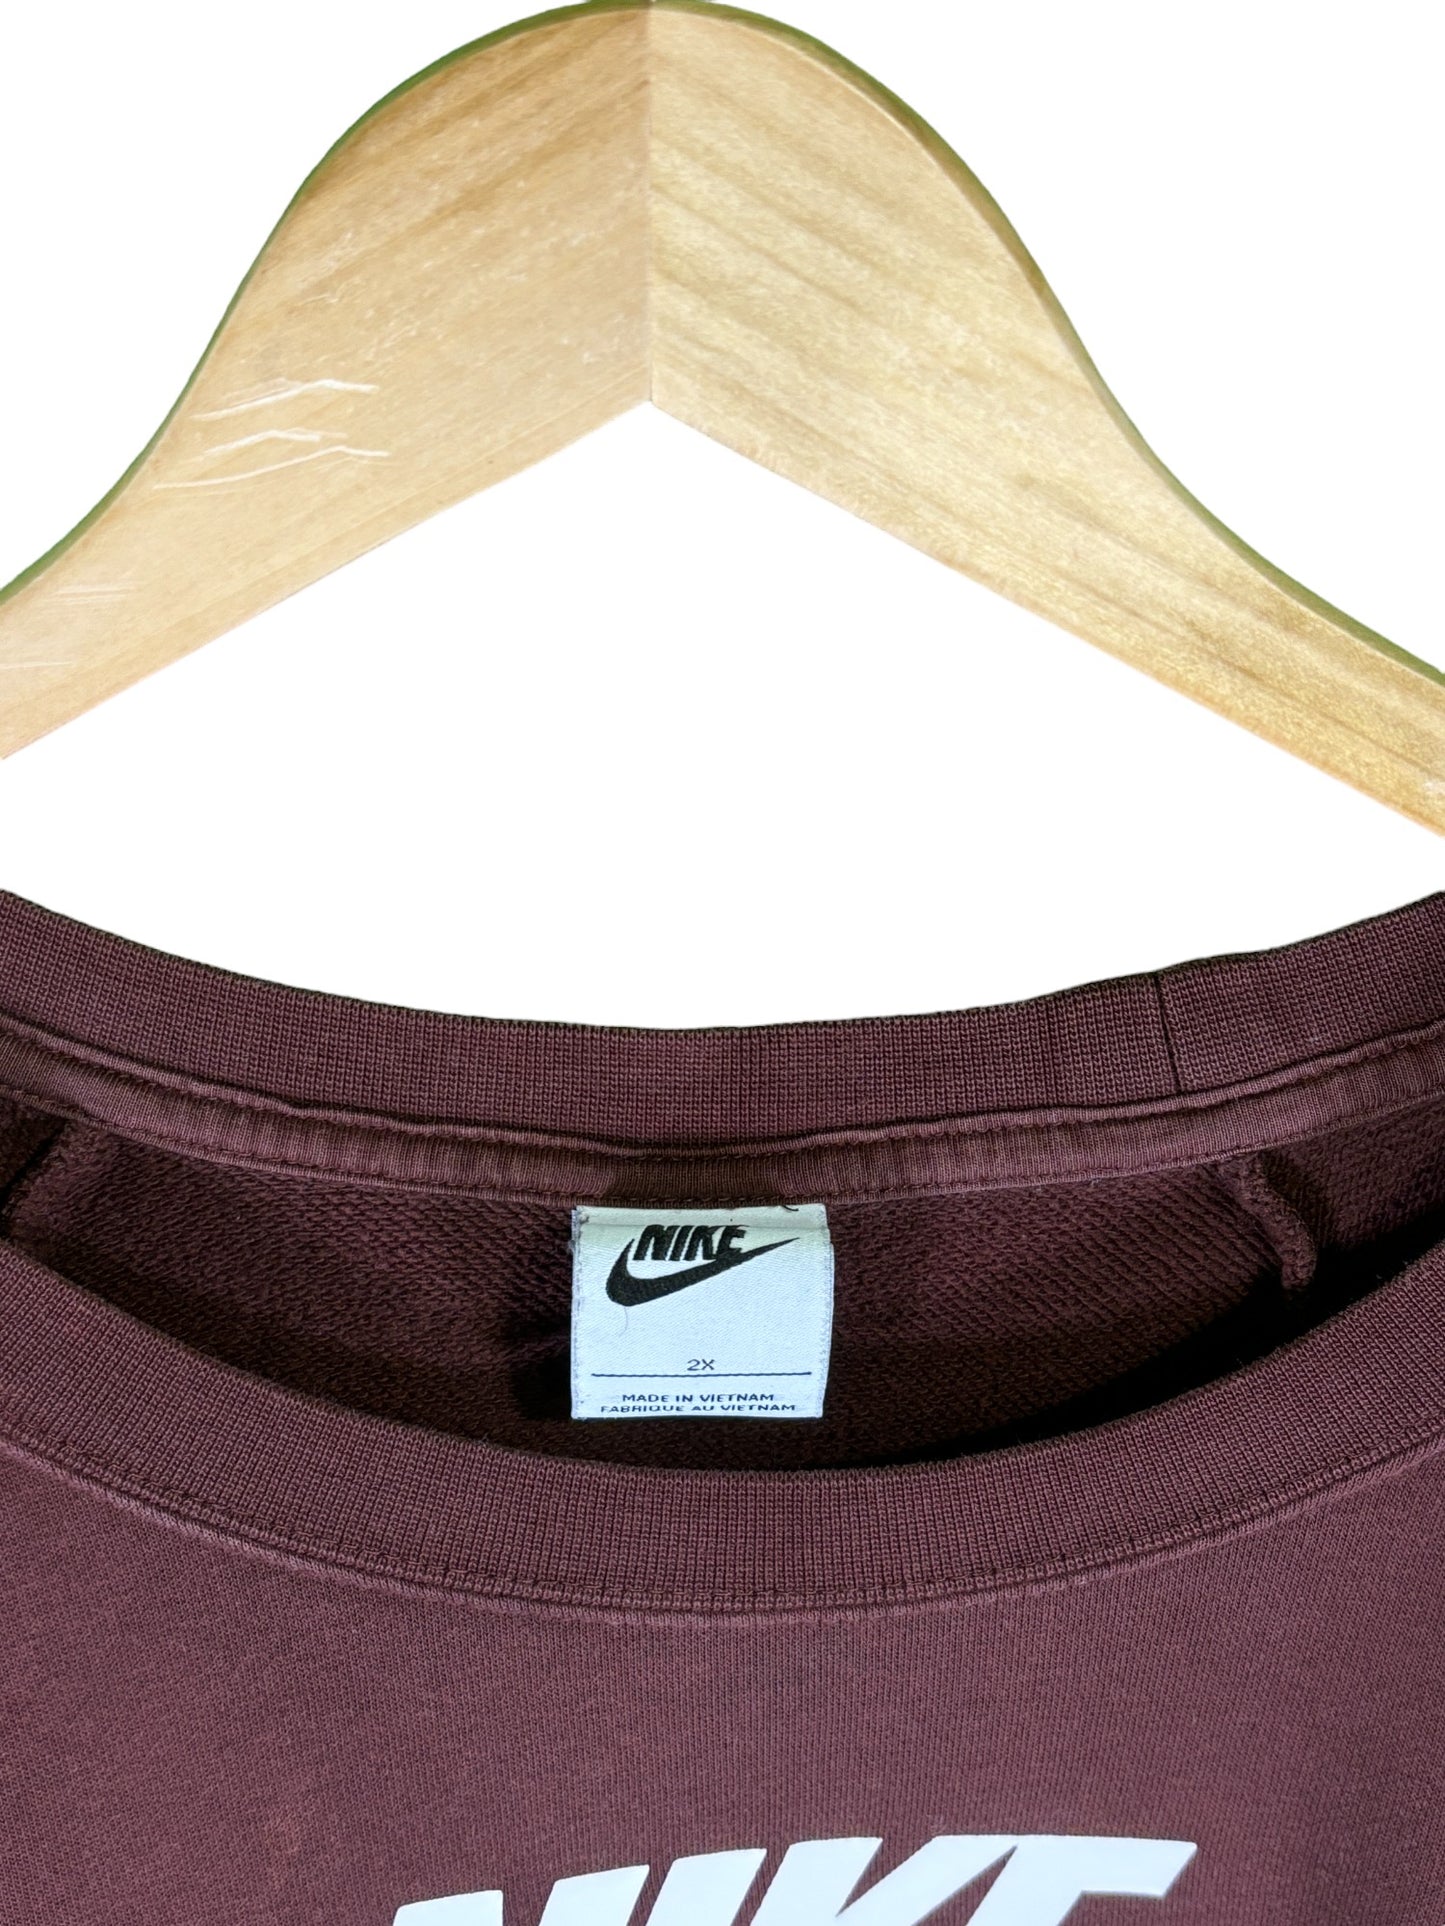 Nike Classic Futura Logo Maroon Crewneck Sweater Size XXL